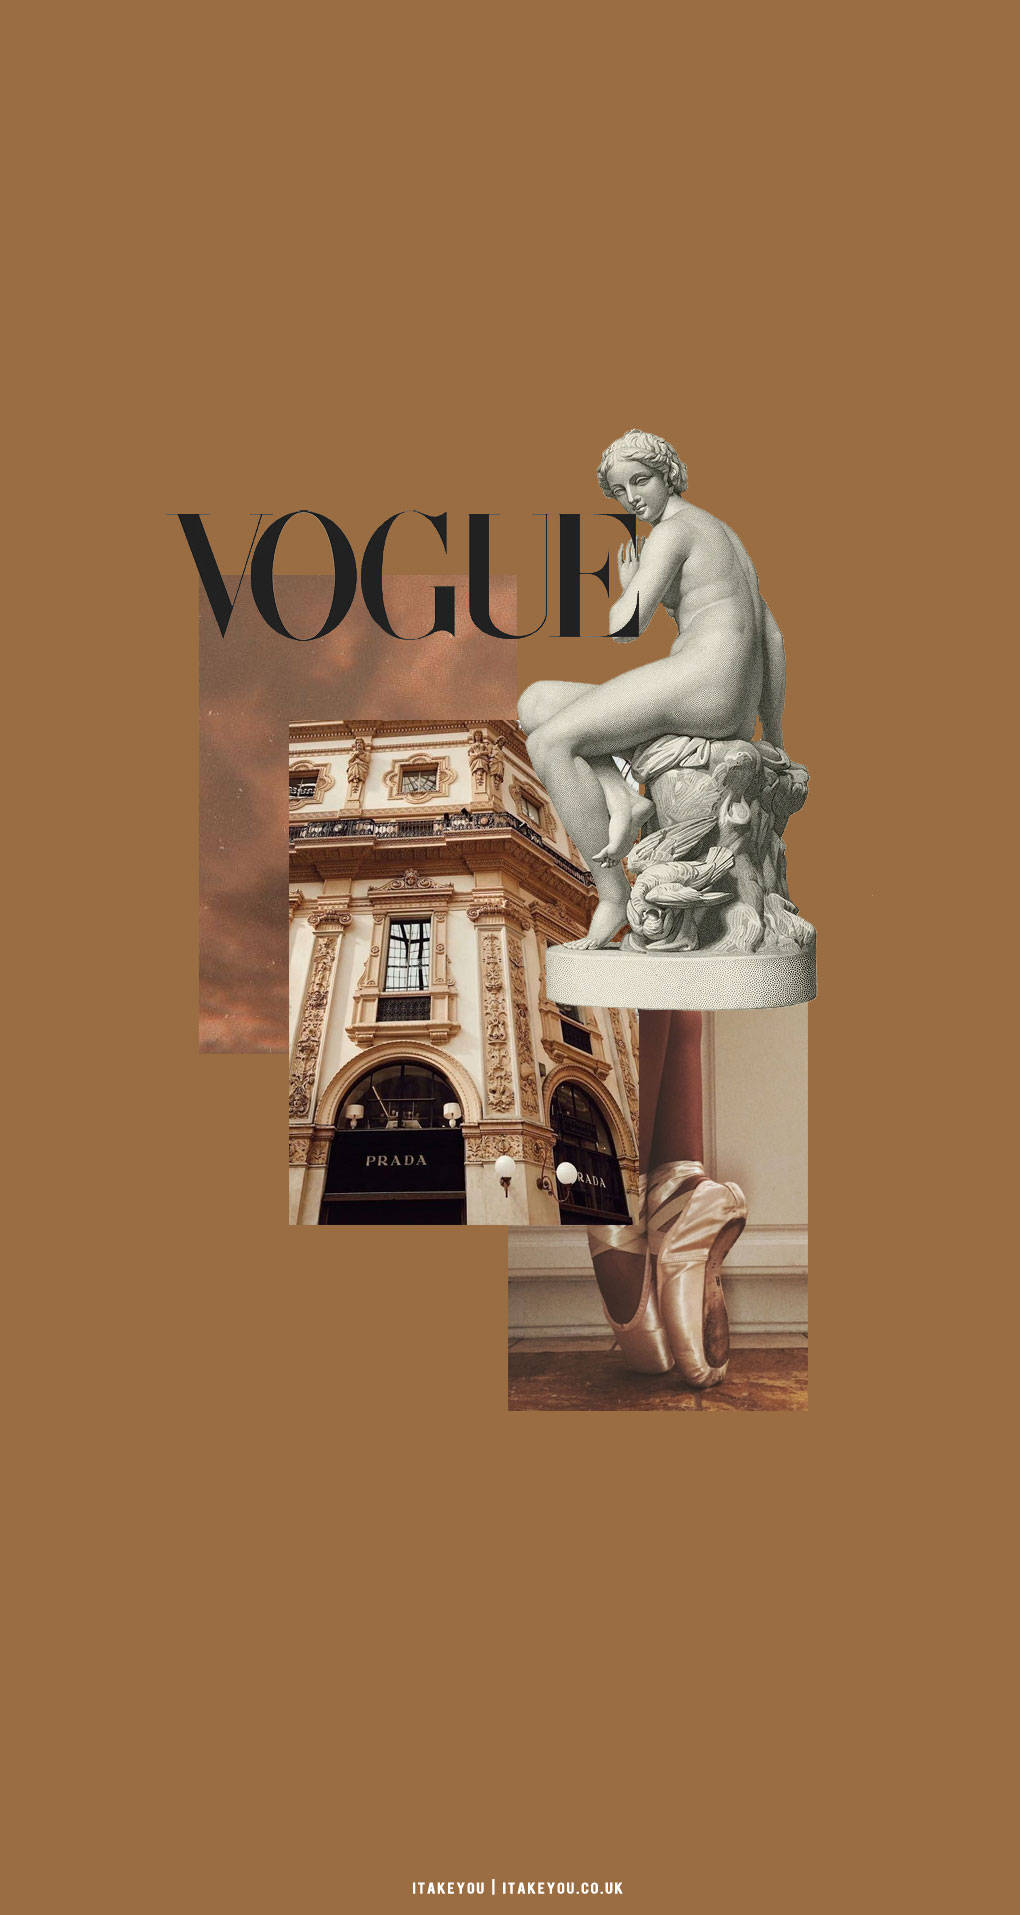 Vogue Magazine Beige Brown Aesthetic Background